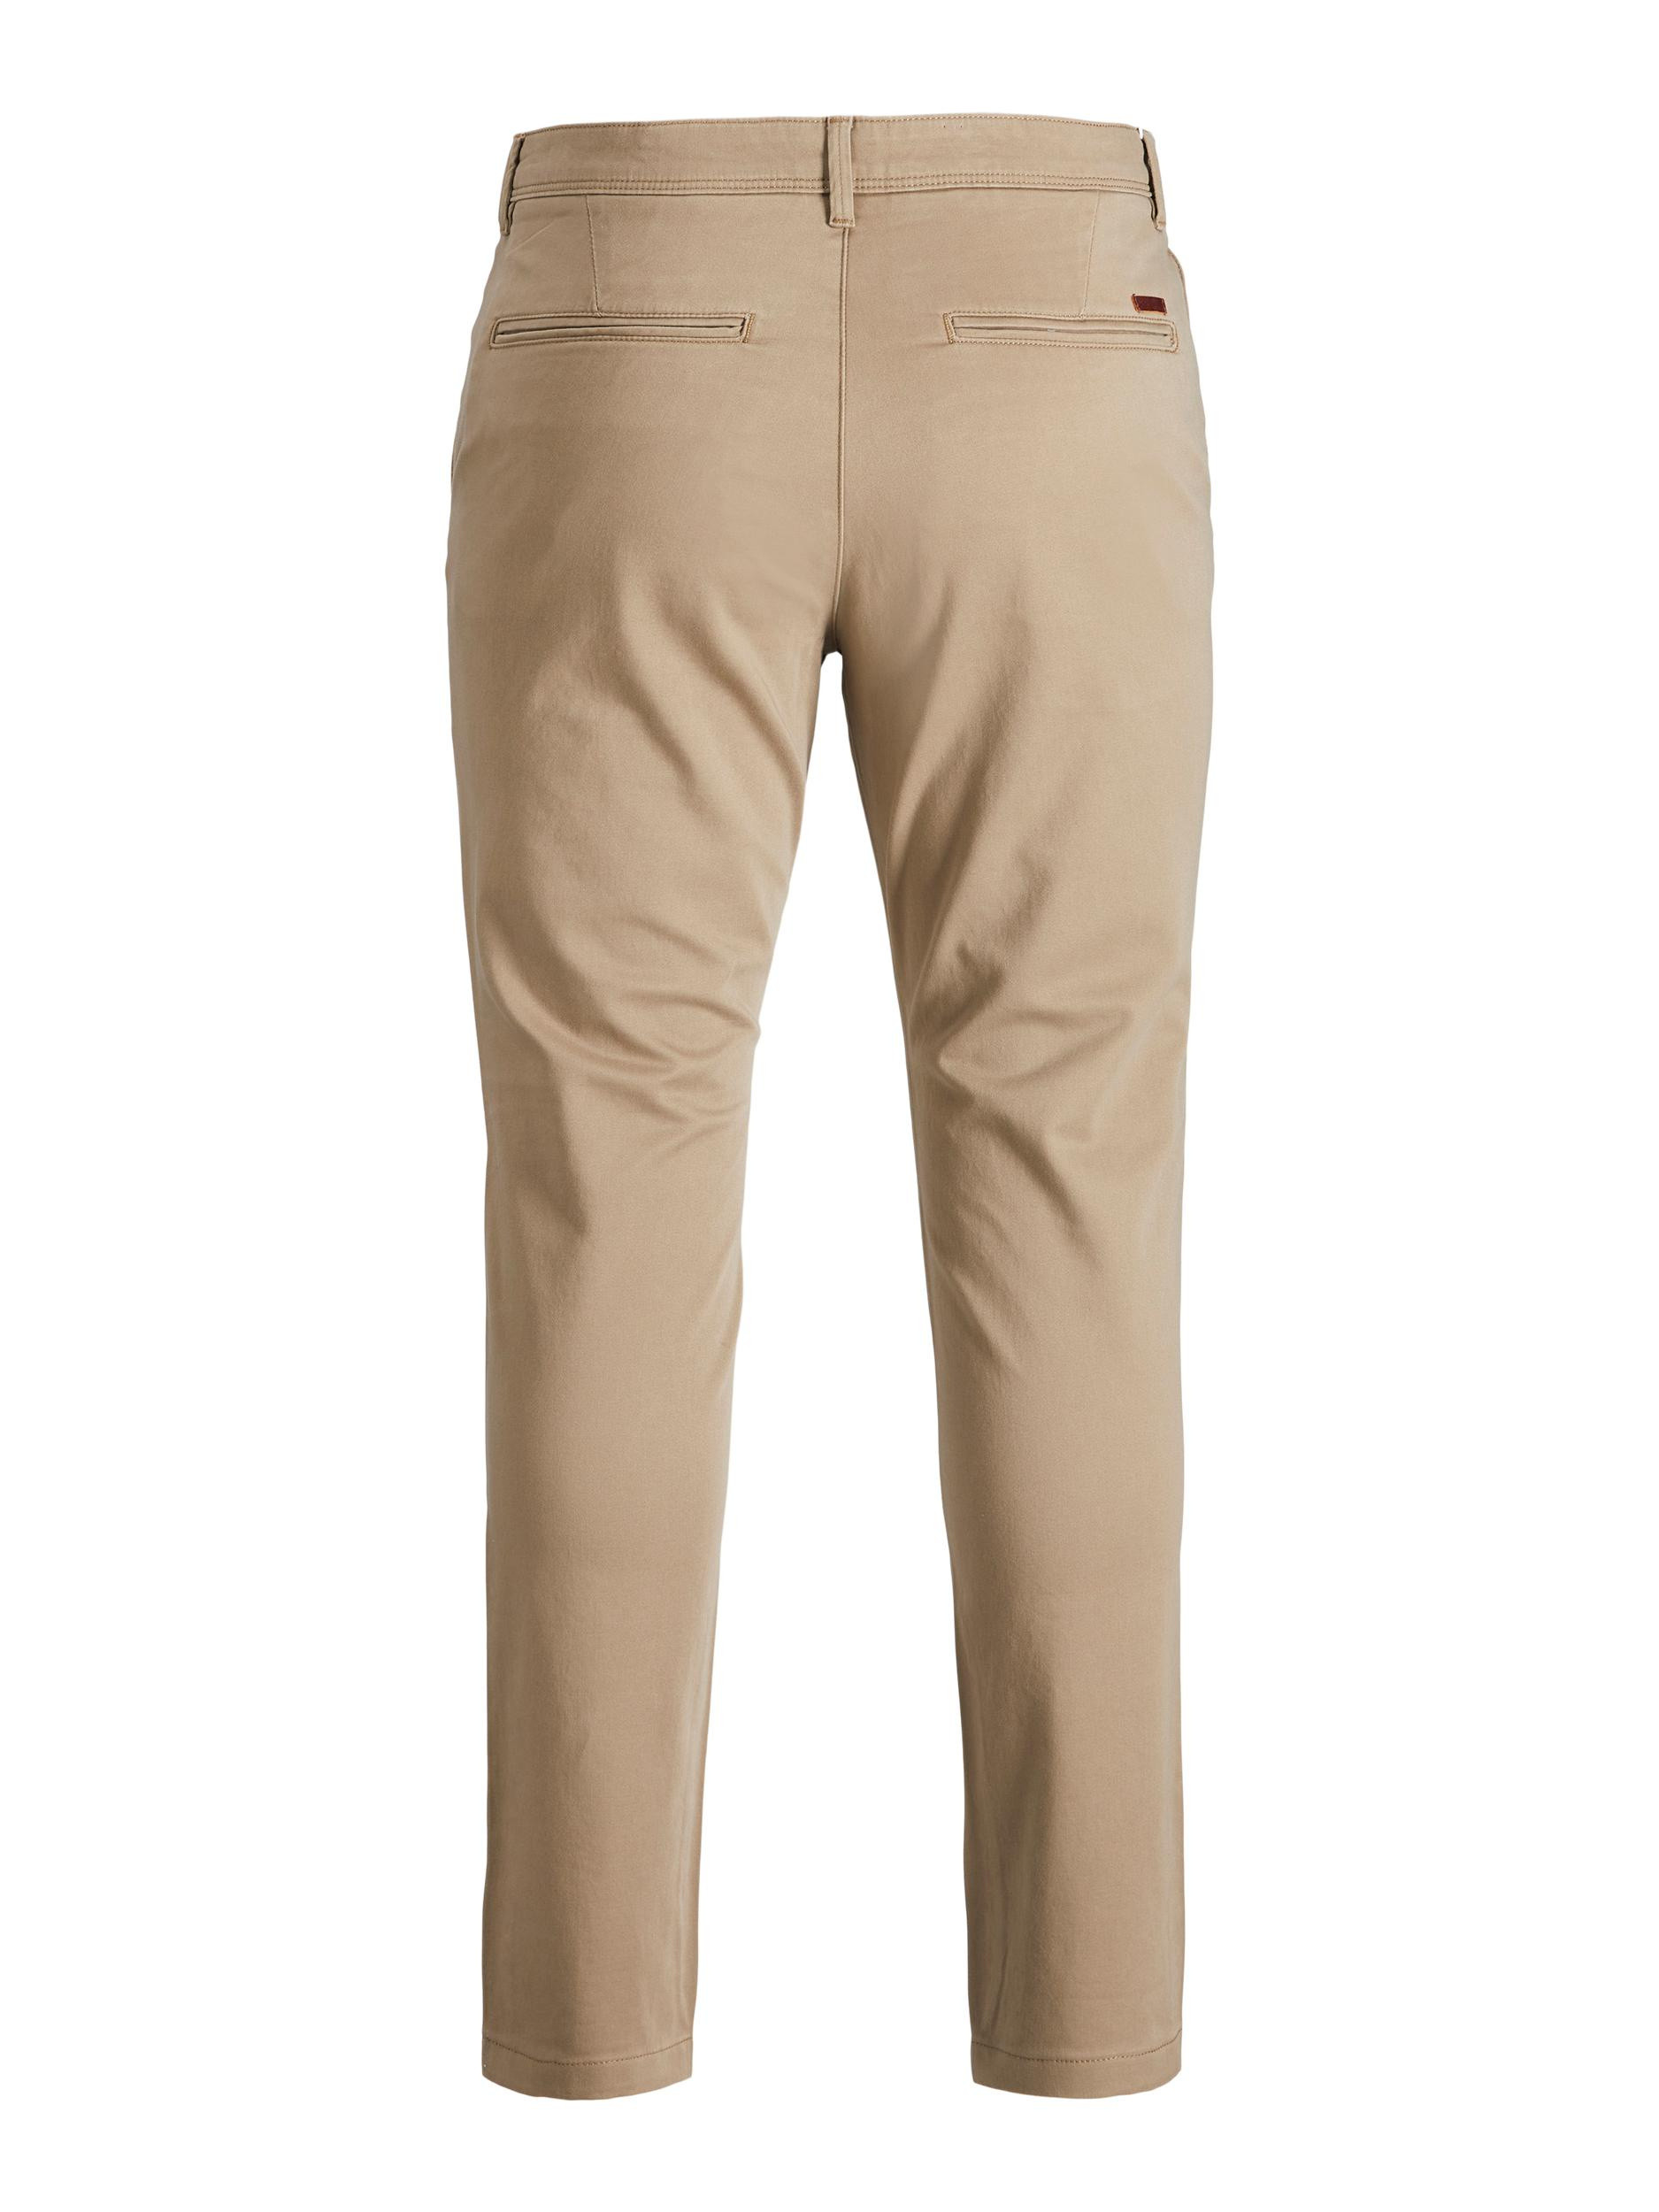 Pantaloni chino slim fit Marco, Beige, large